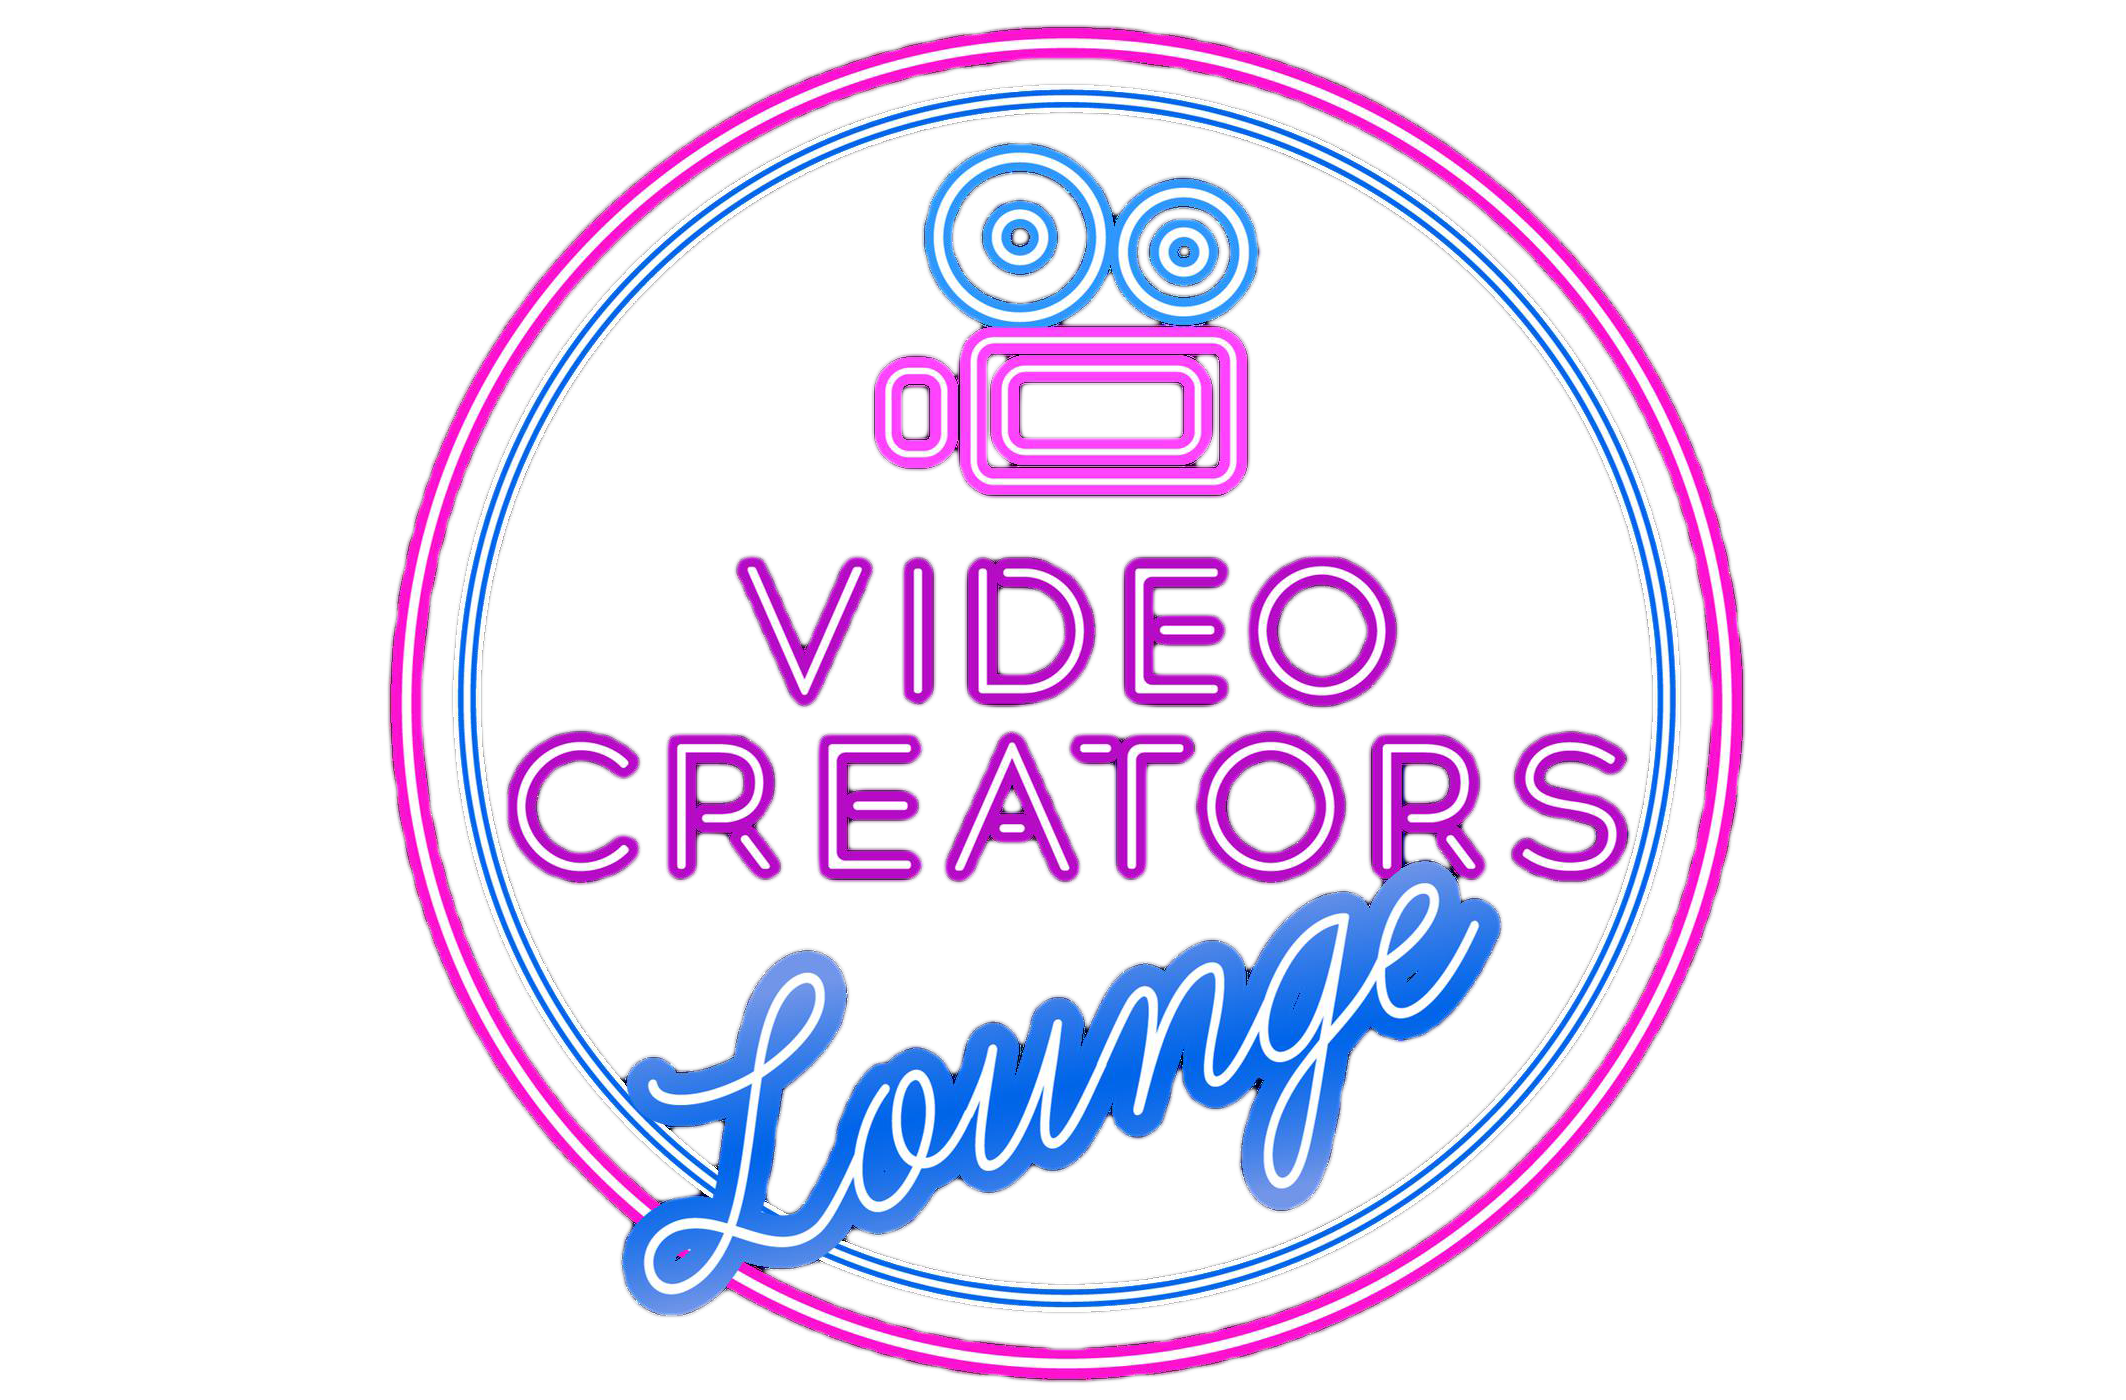 Video Creators Lounge